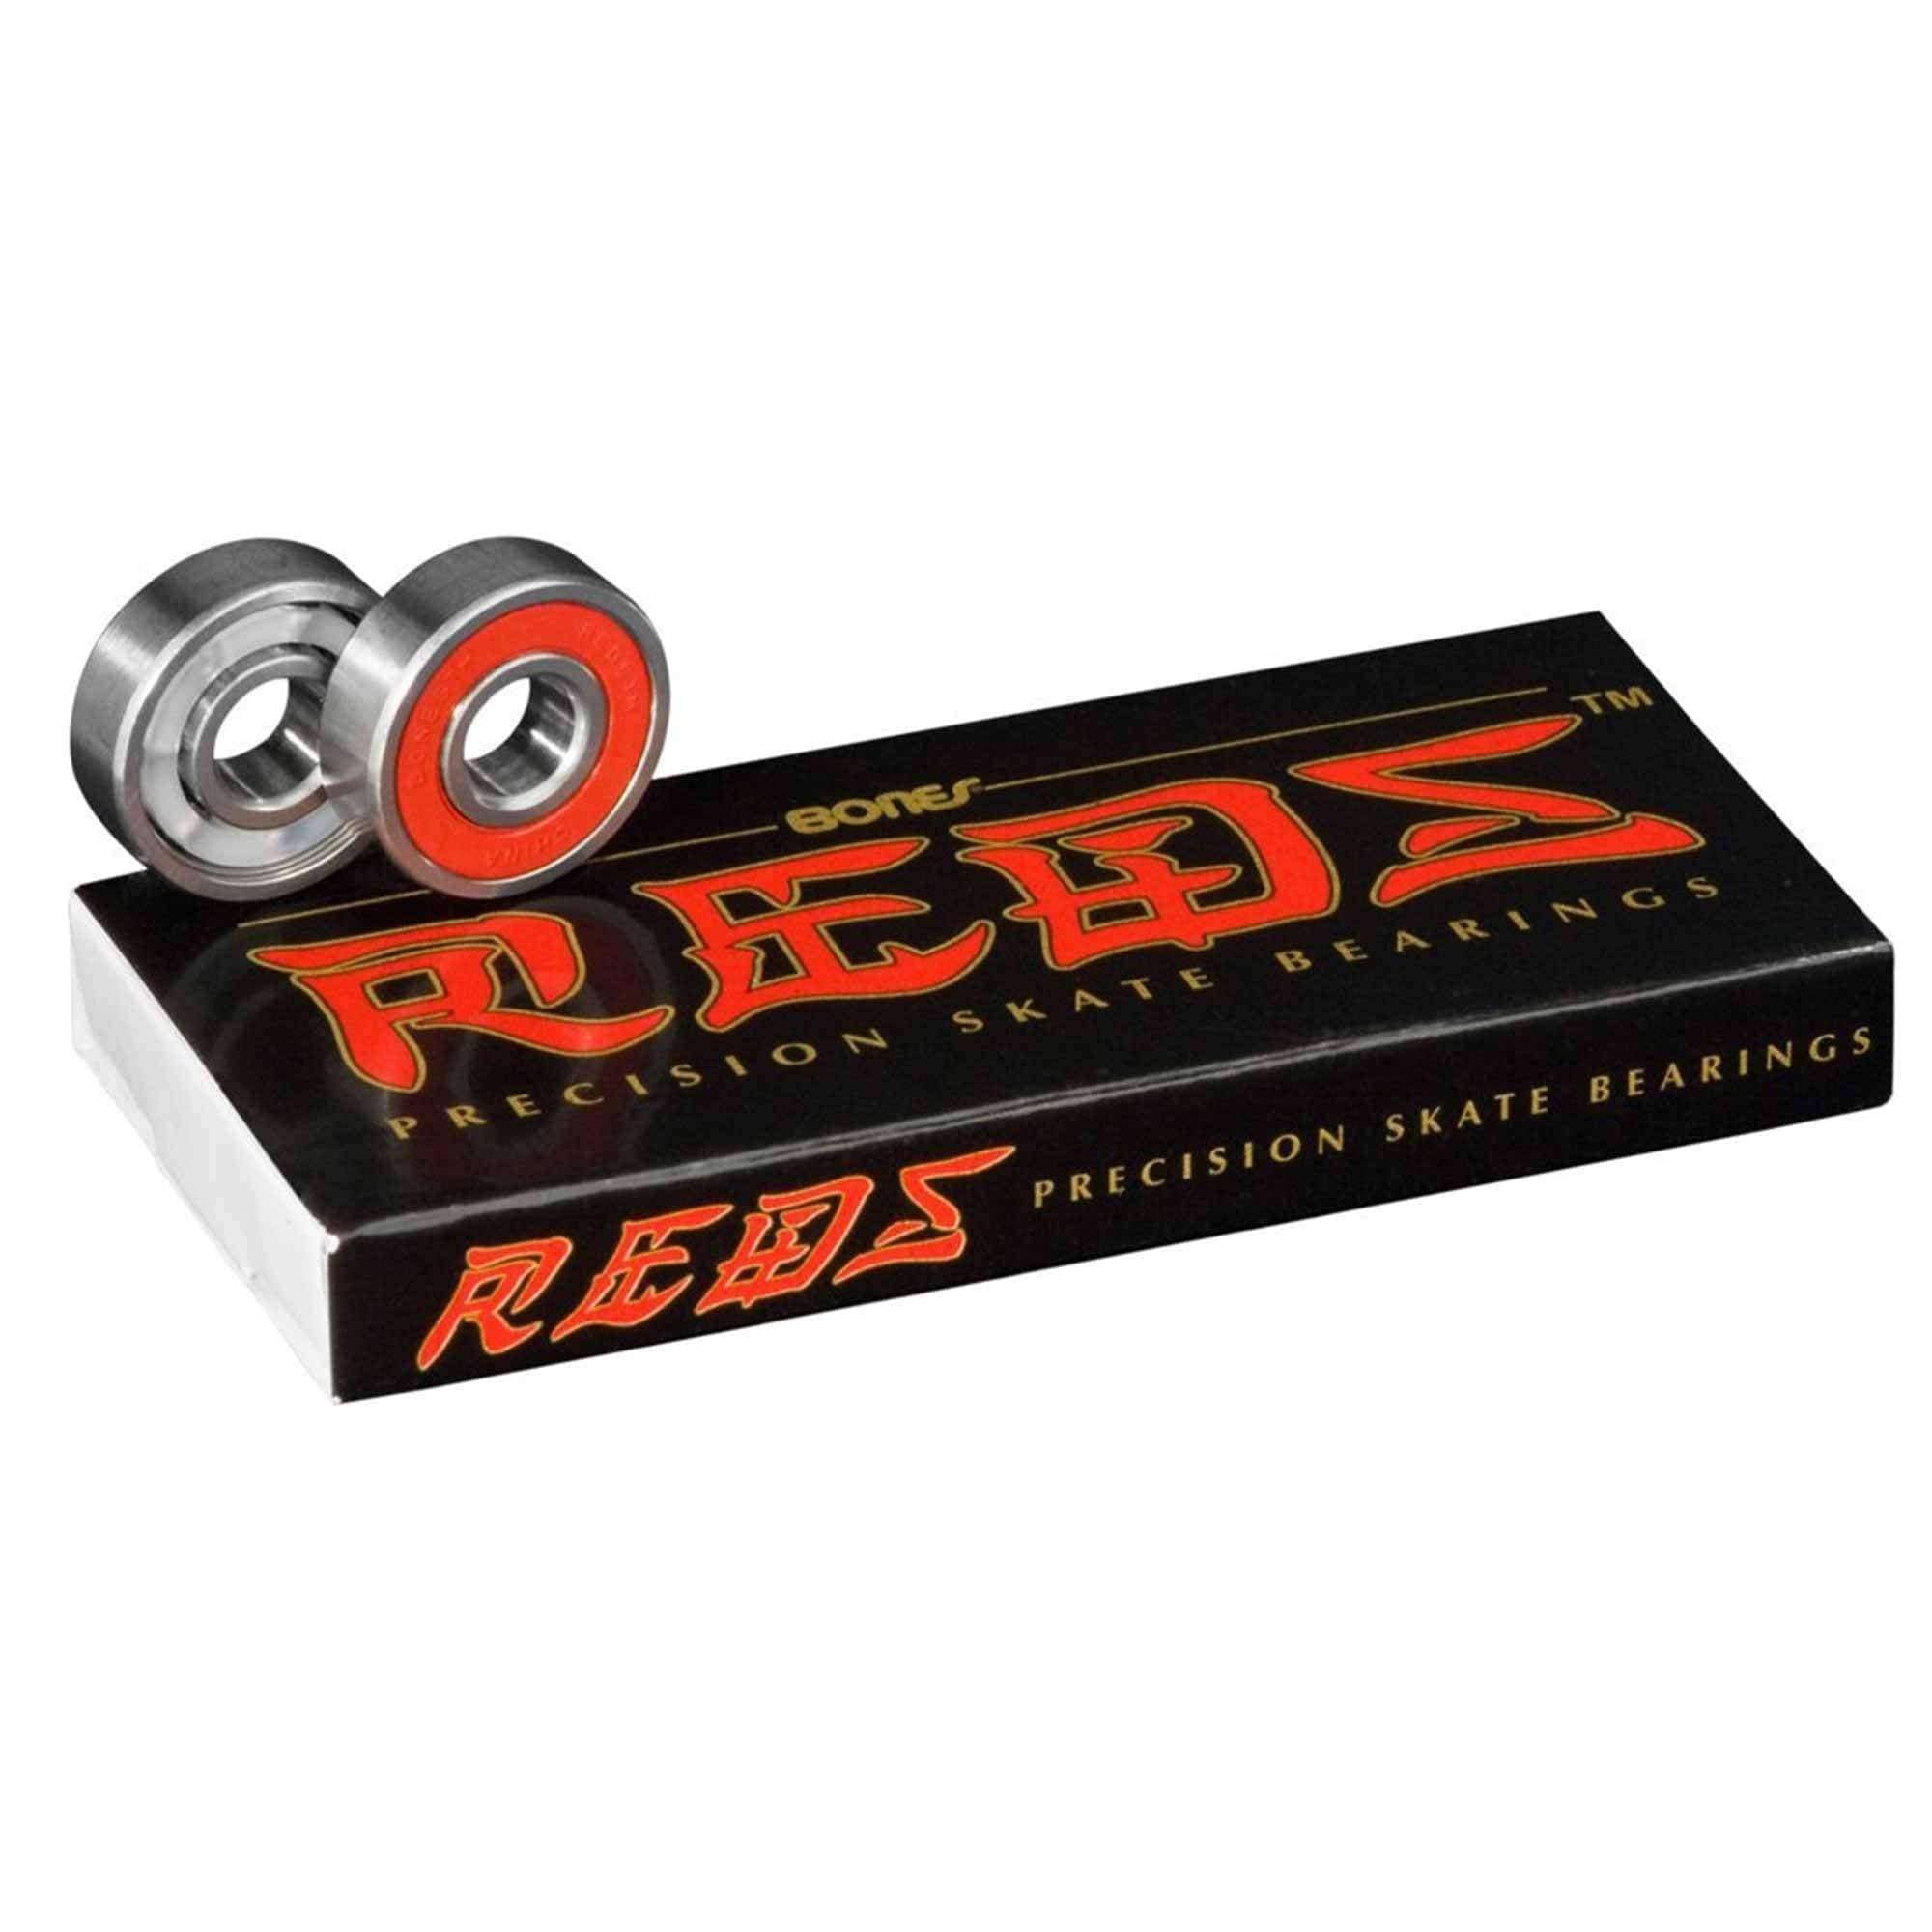 Bones Reds Precision Skate Bearings Pro Skateboard Bearings by Bones